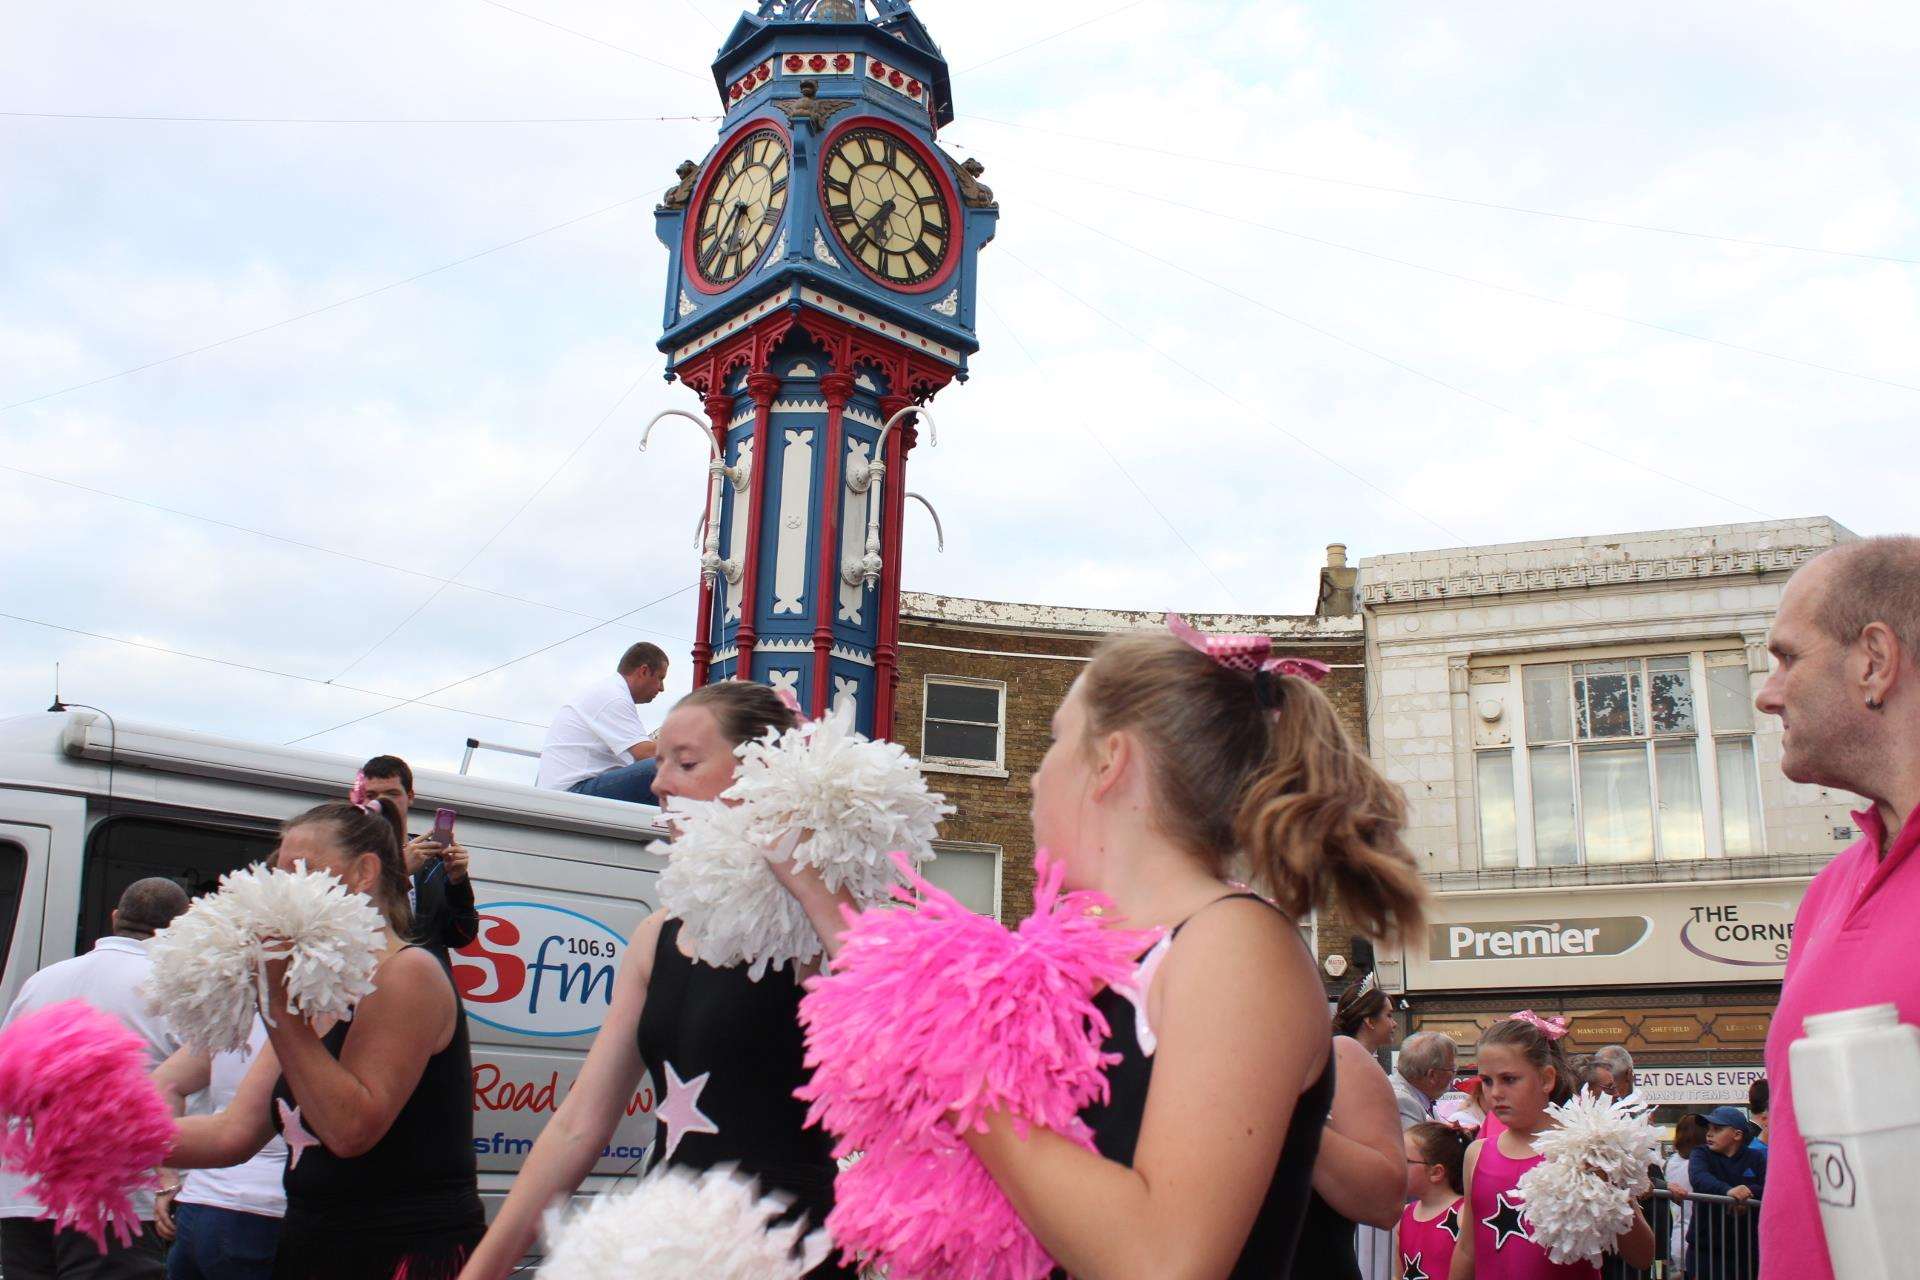 Pom-pom girls at Sheerness carnival (3628261)